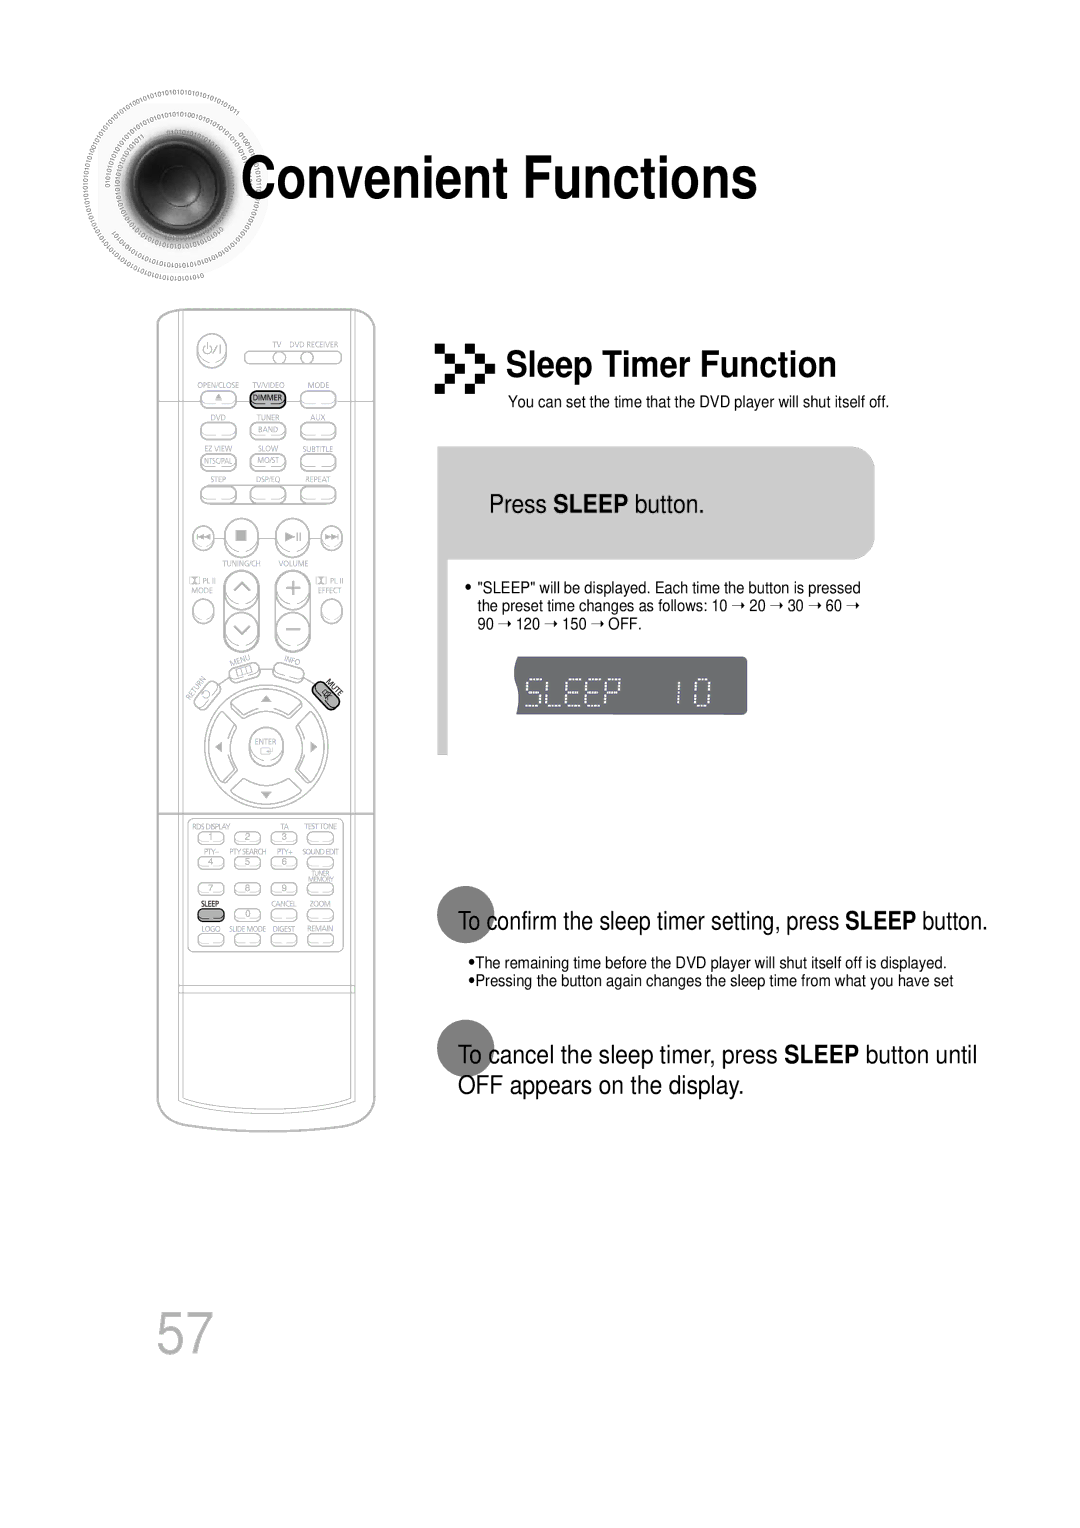 Samsung HTDB300RH/ELS Convenient Functions, Press Sleep button, To confirm the sleep timer setting, press Sleep button 